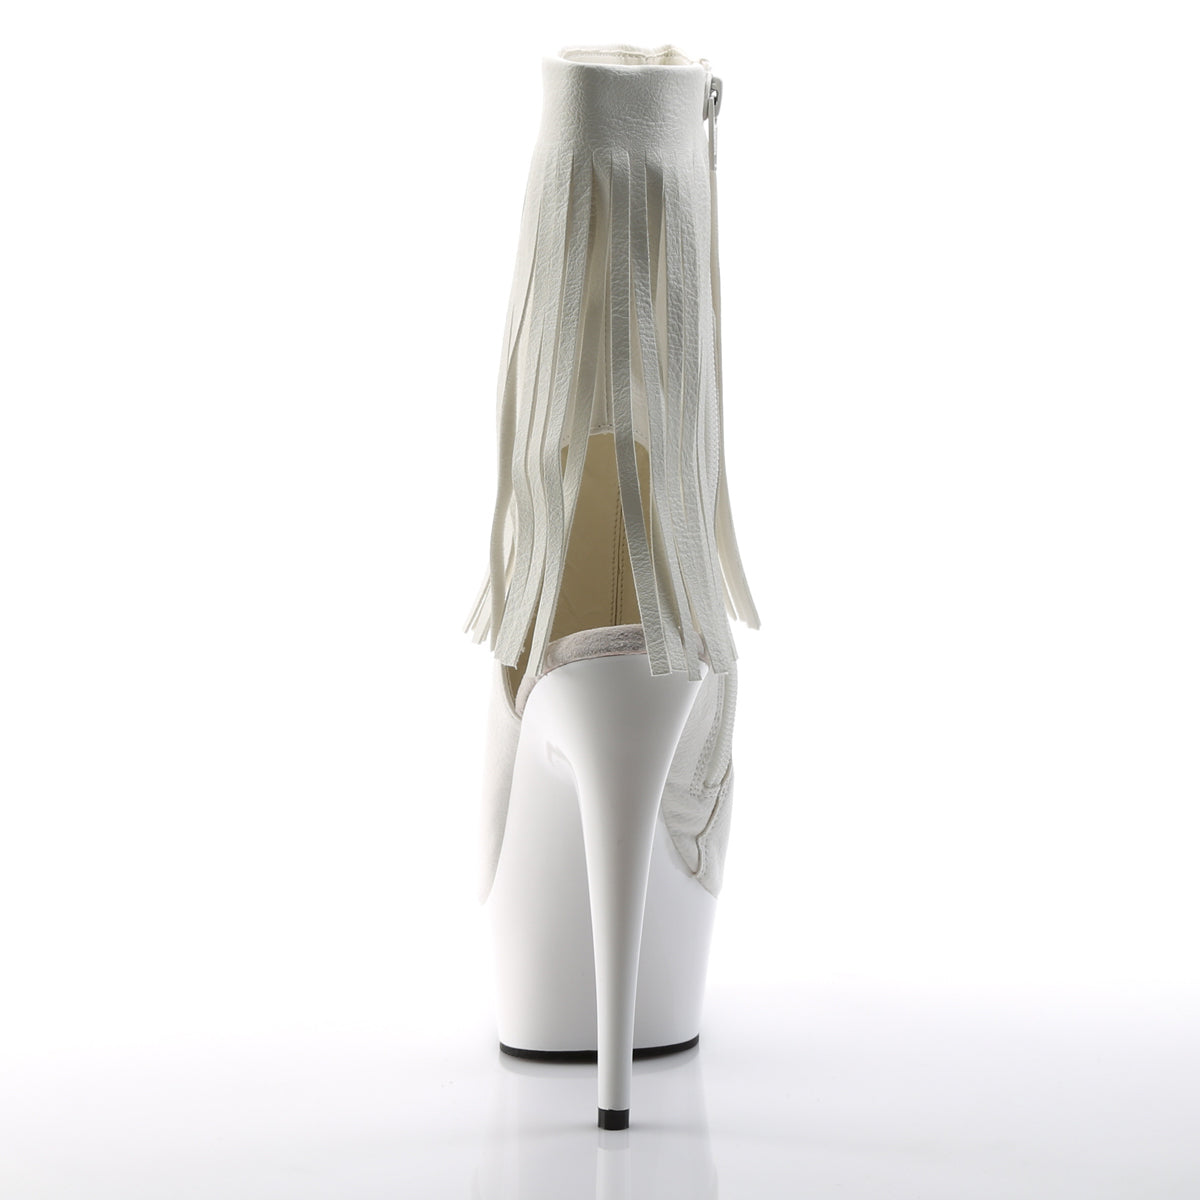 DELIGHT-1019 Pleaser 6 Inch Heel White Pole Dancer Platforms-Pleaser- Sexy Shoes Fetish Footwear